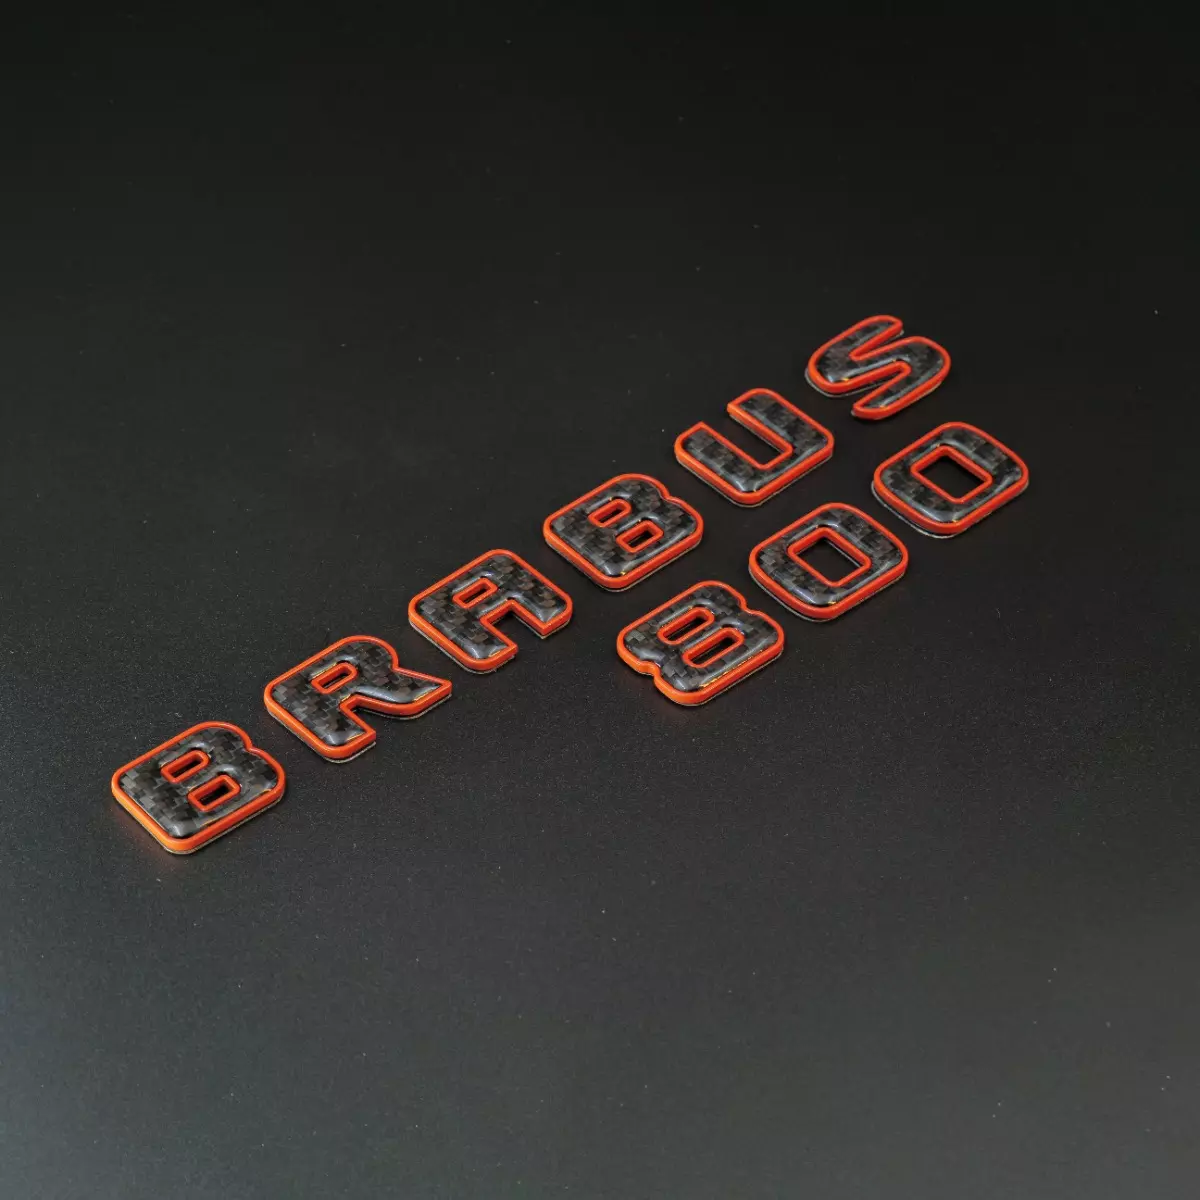 Orange Metal with Carbon Brabus 800 Badges Emblems Set for Mercedes-Benz Vehicles